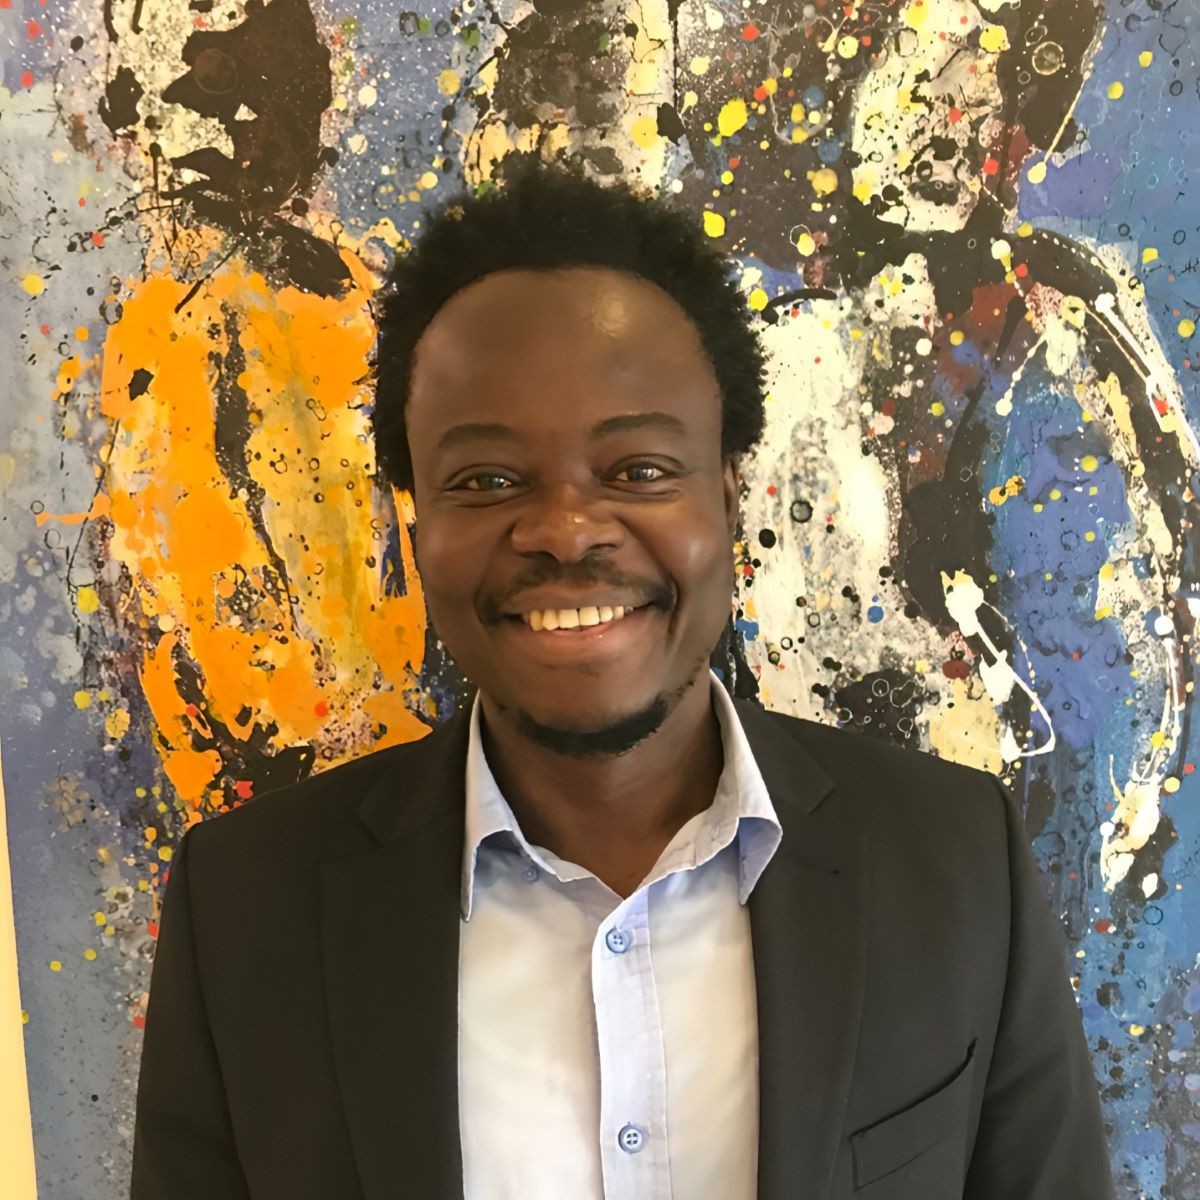 Les mesures incitatives au profit de l'entreprenariat et des startups en RDC. Par Daniel Djedi Djongambolo Ohonge.